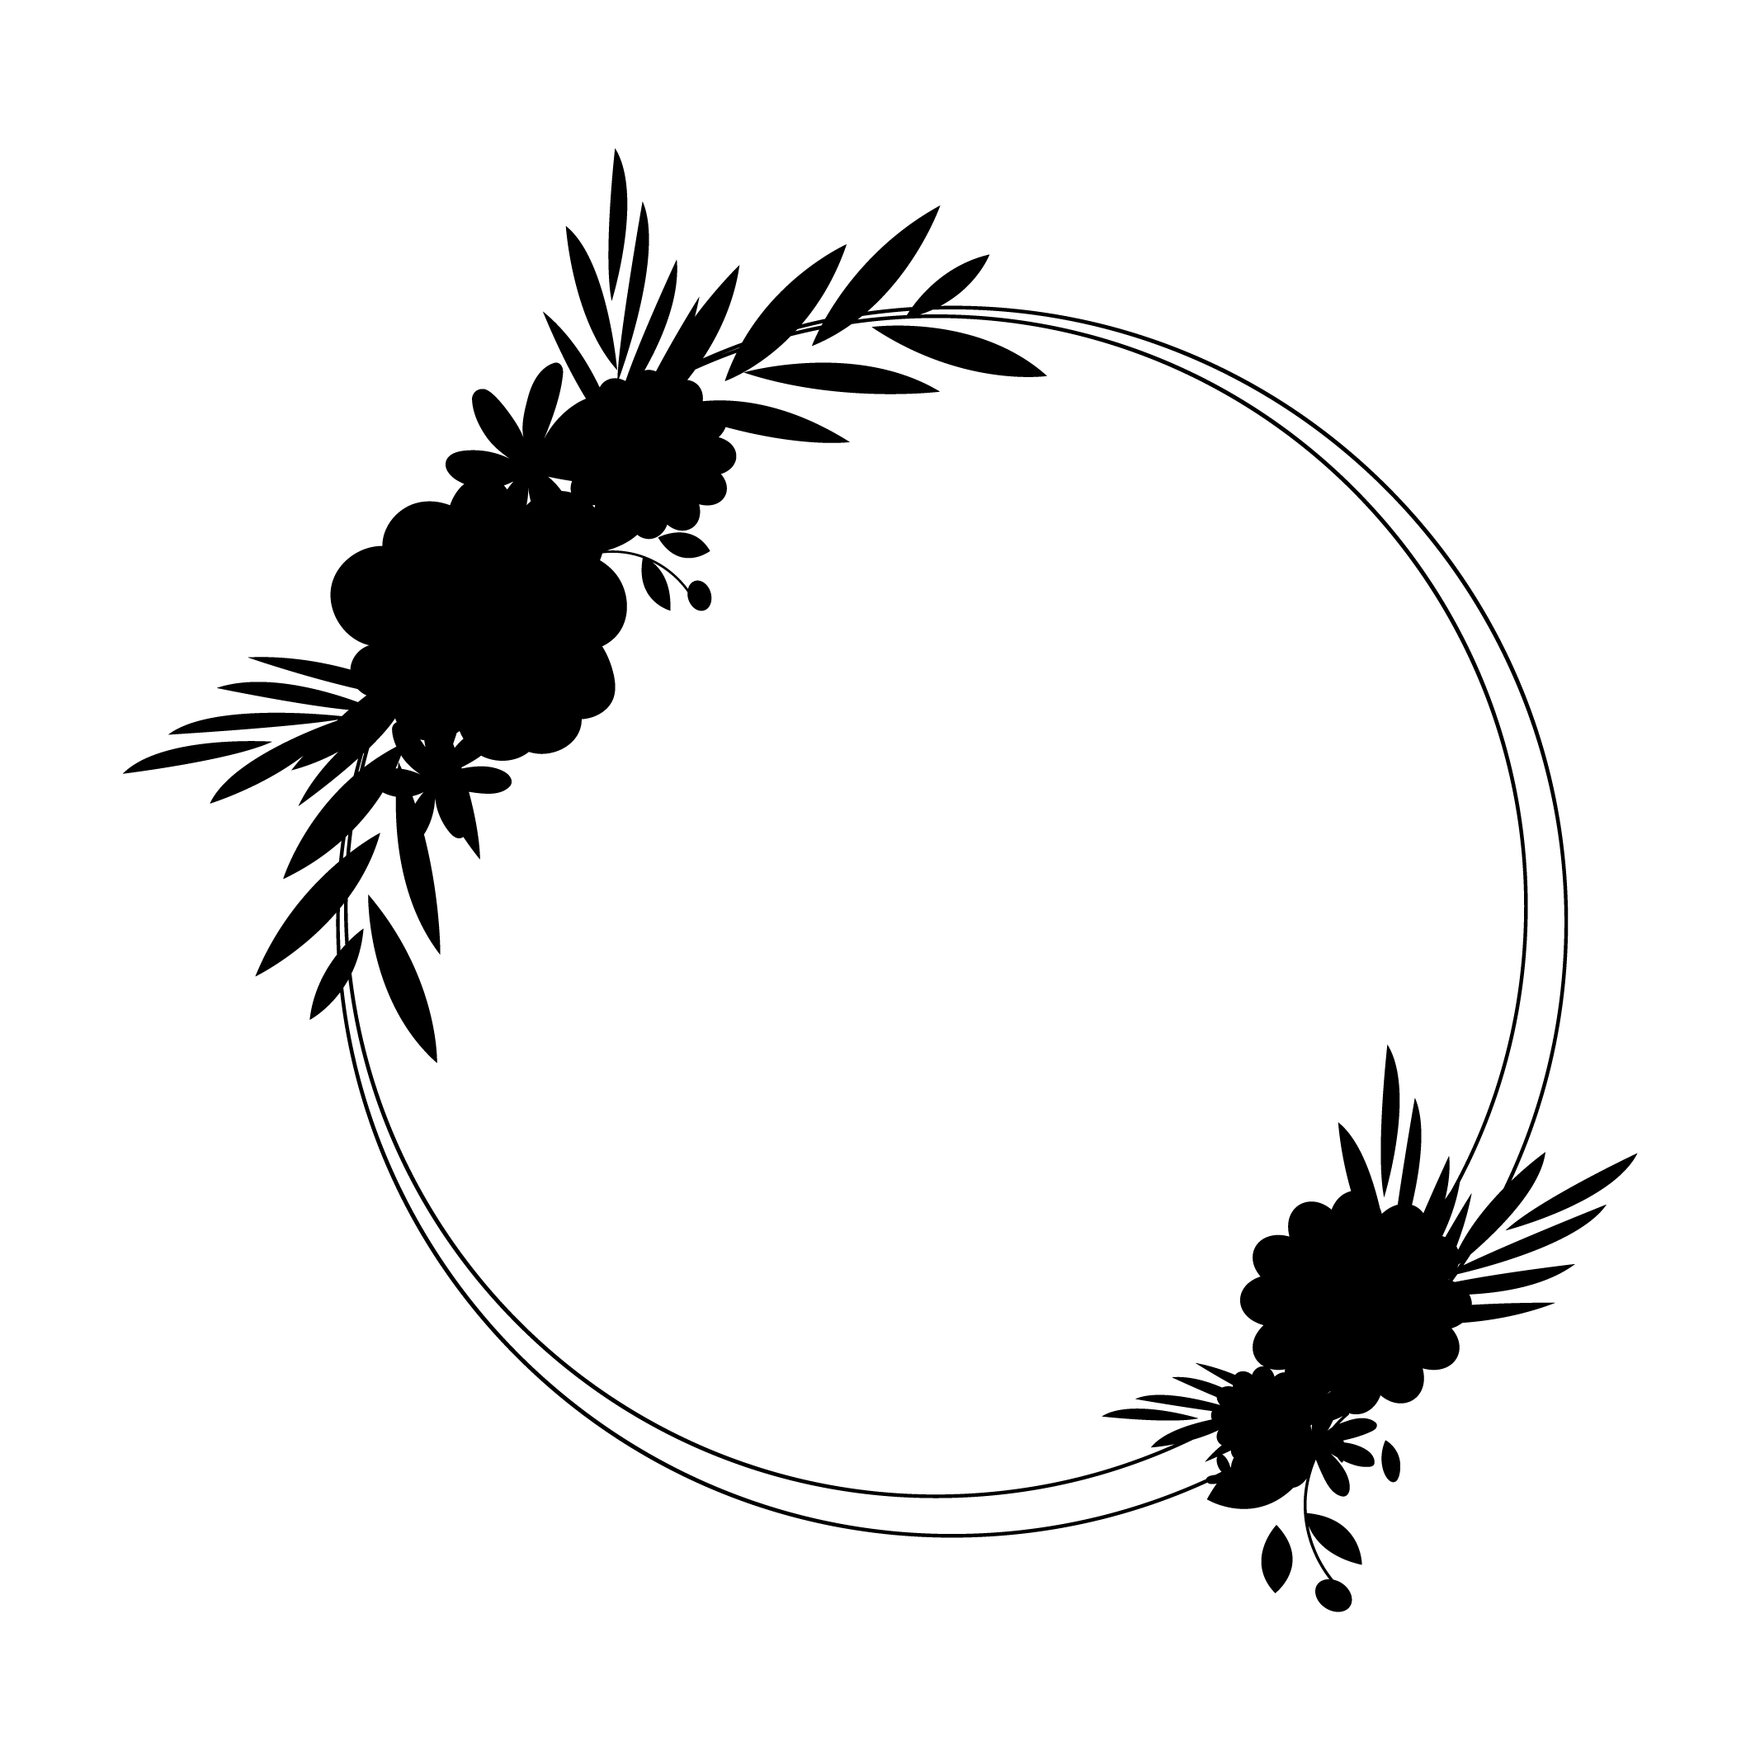 Free Wedding Wreath Silhouette in Illustrator, EPS, SVG, JPG, PNG